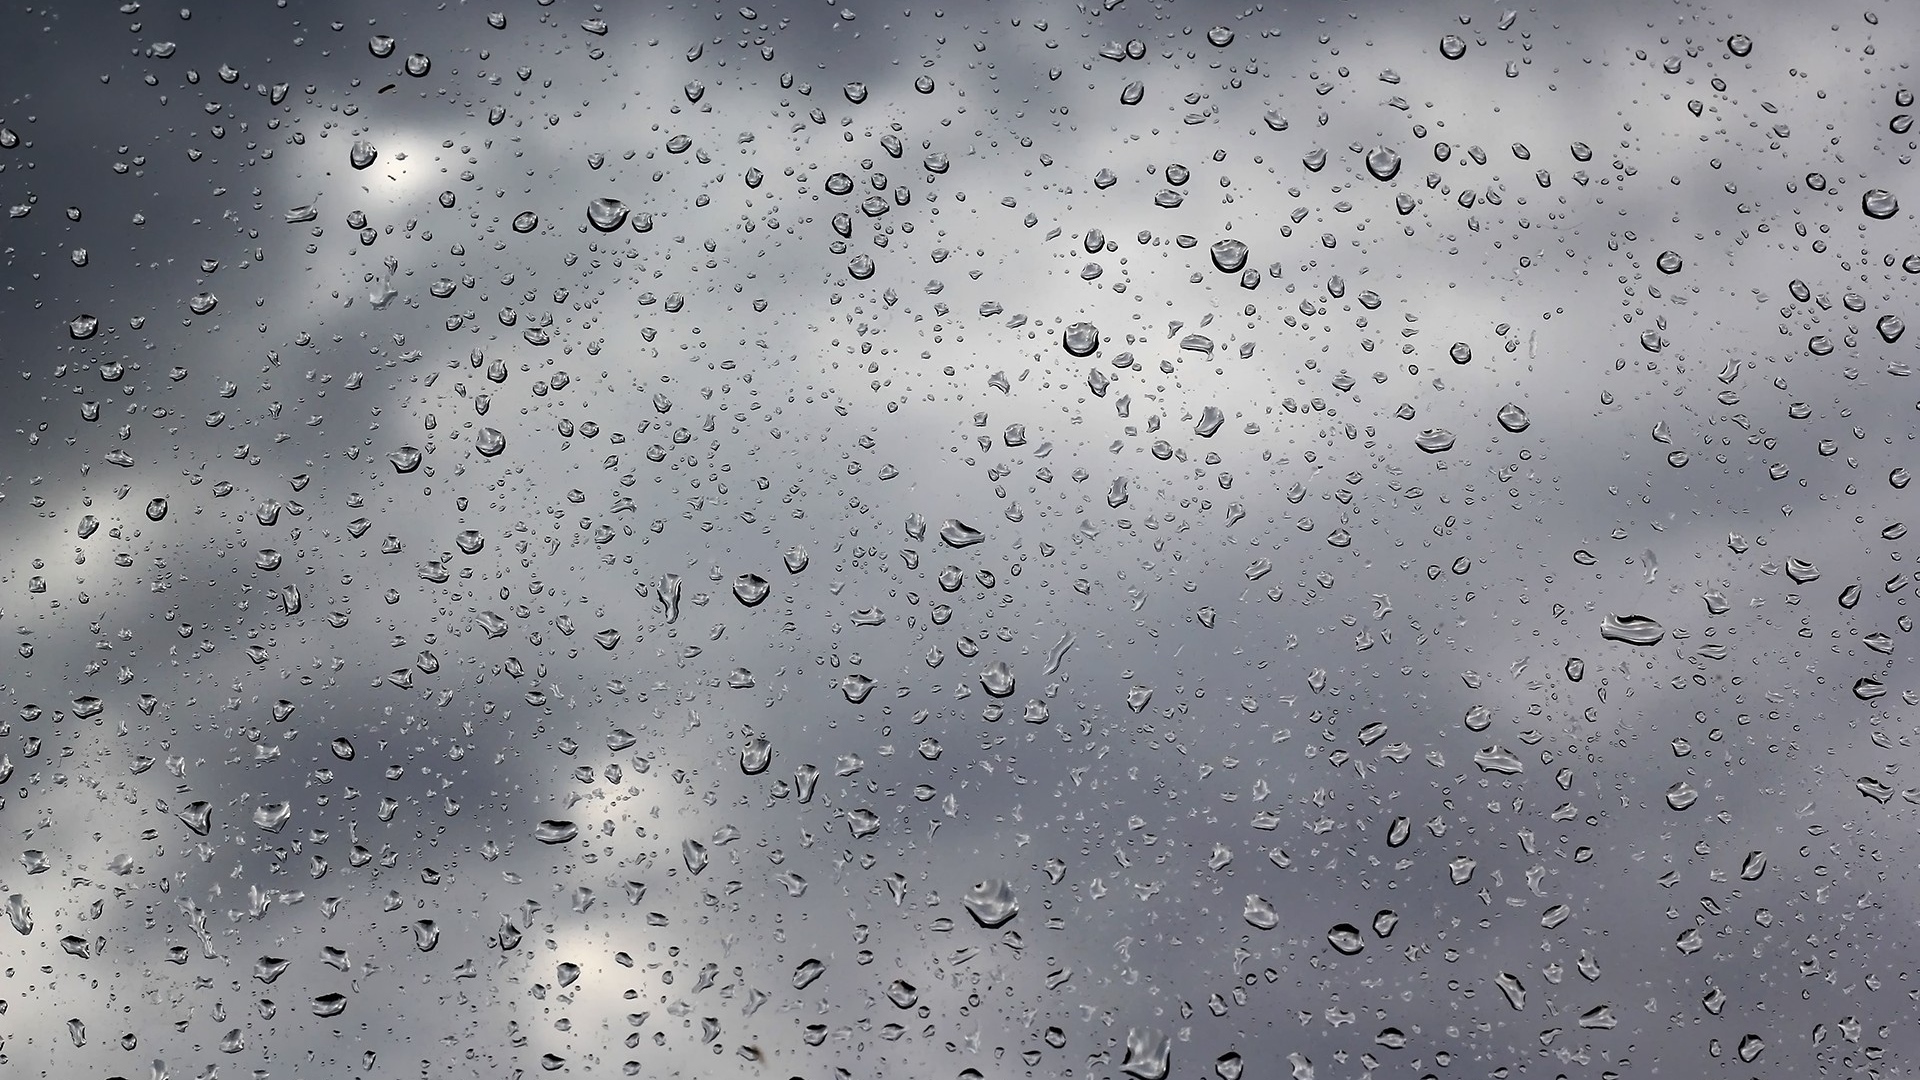 Wallpaper Drops Rain Glass Water Clouds Full HD 1080p